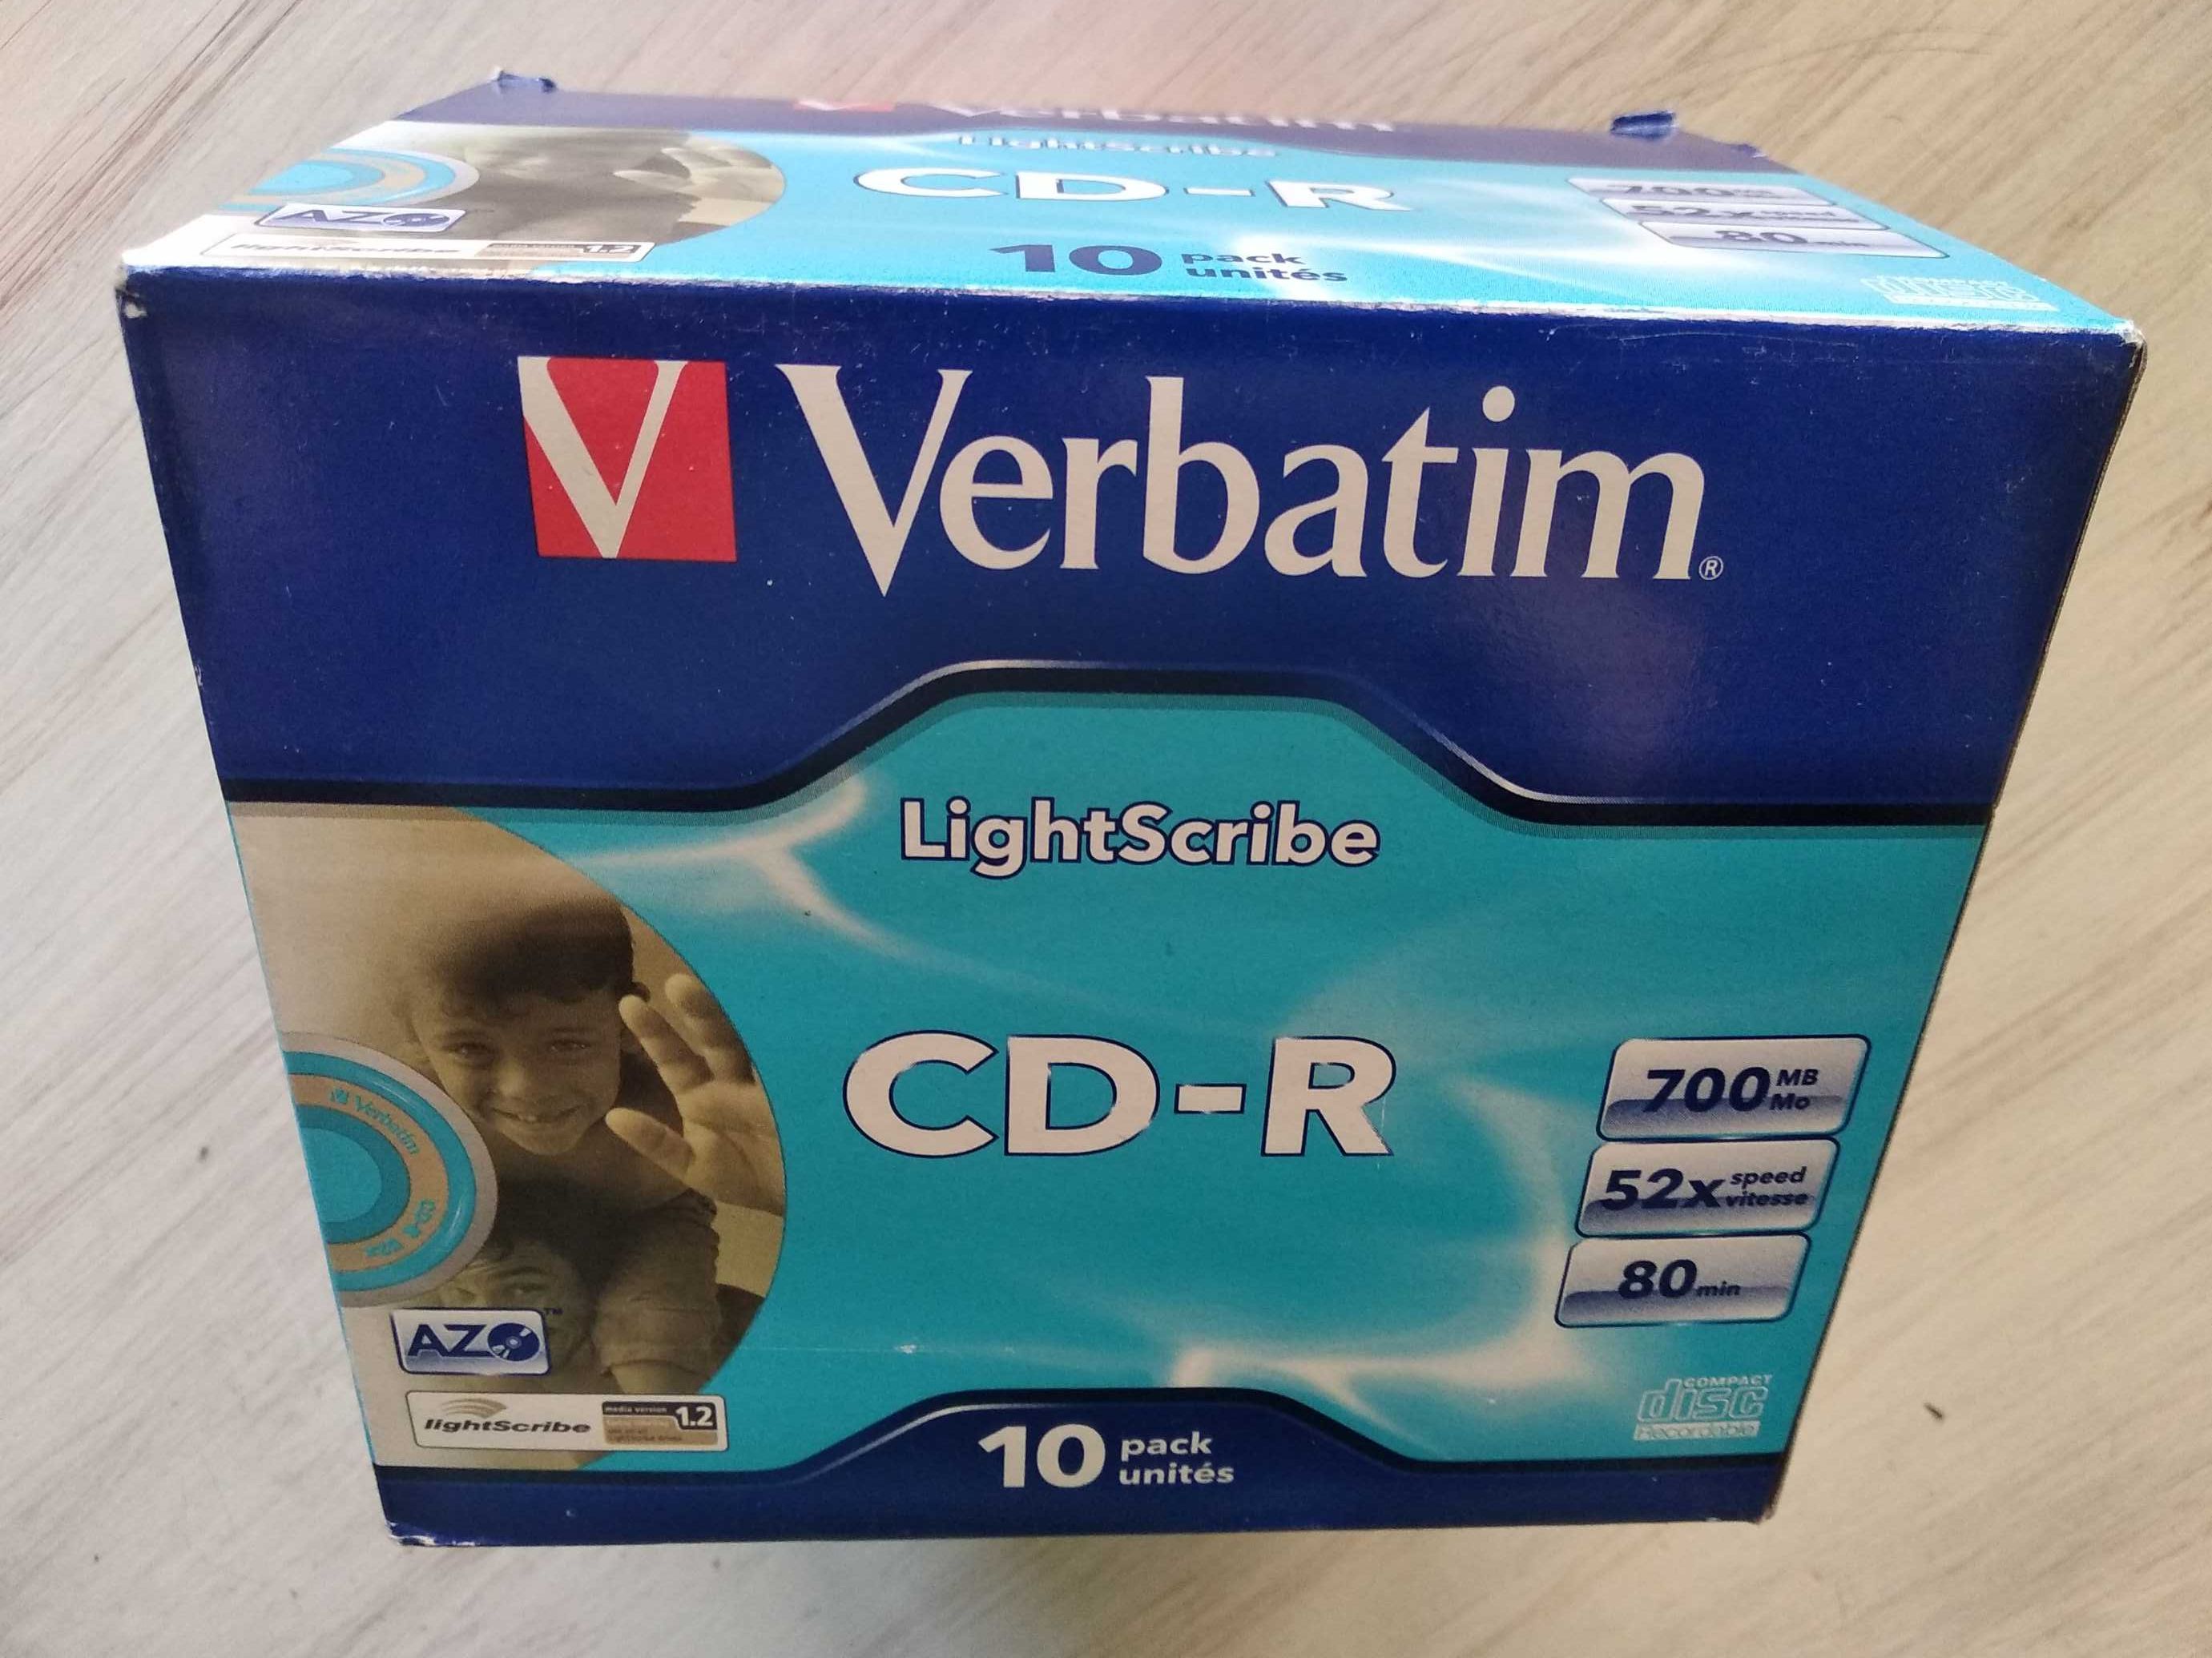 NOWE płyty Verbatim LightScribe CD-R 700MB/80min. x52 10-pak 150zł